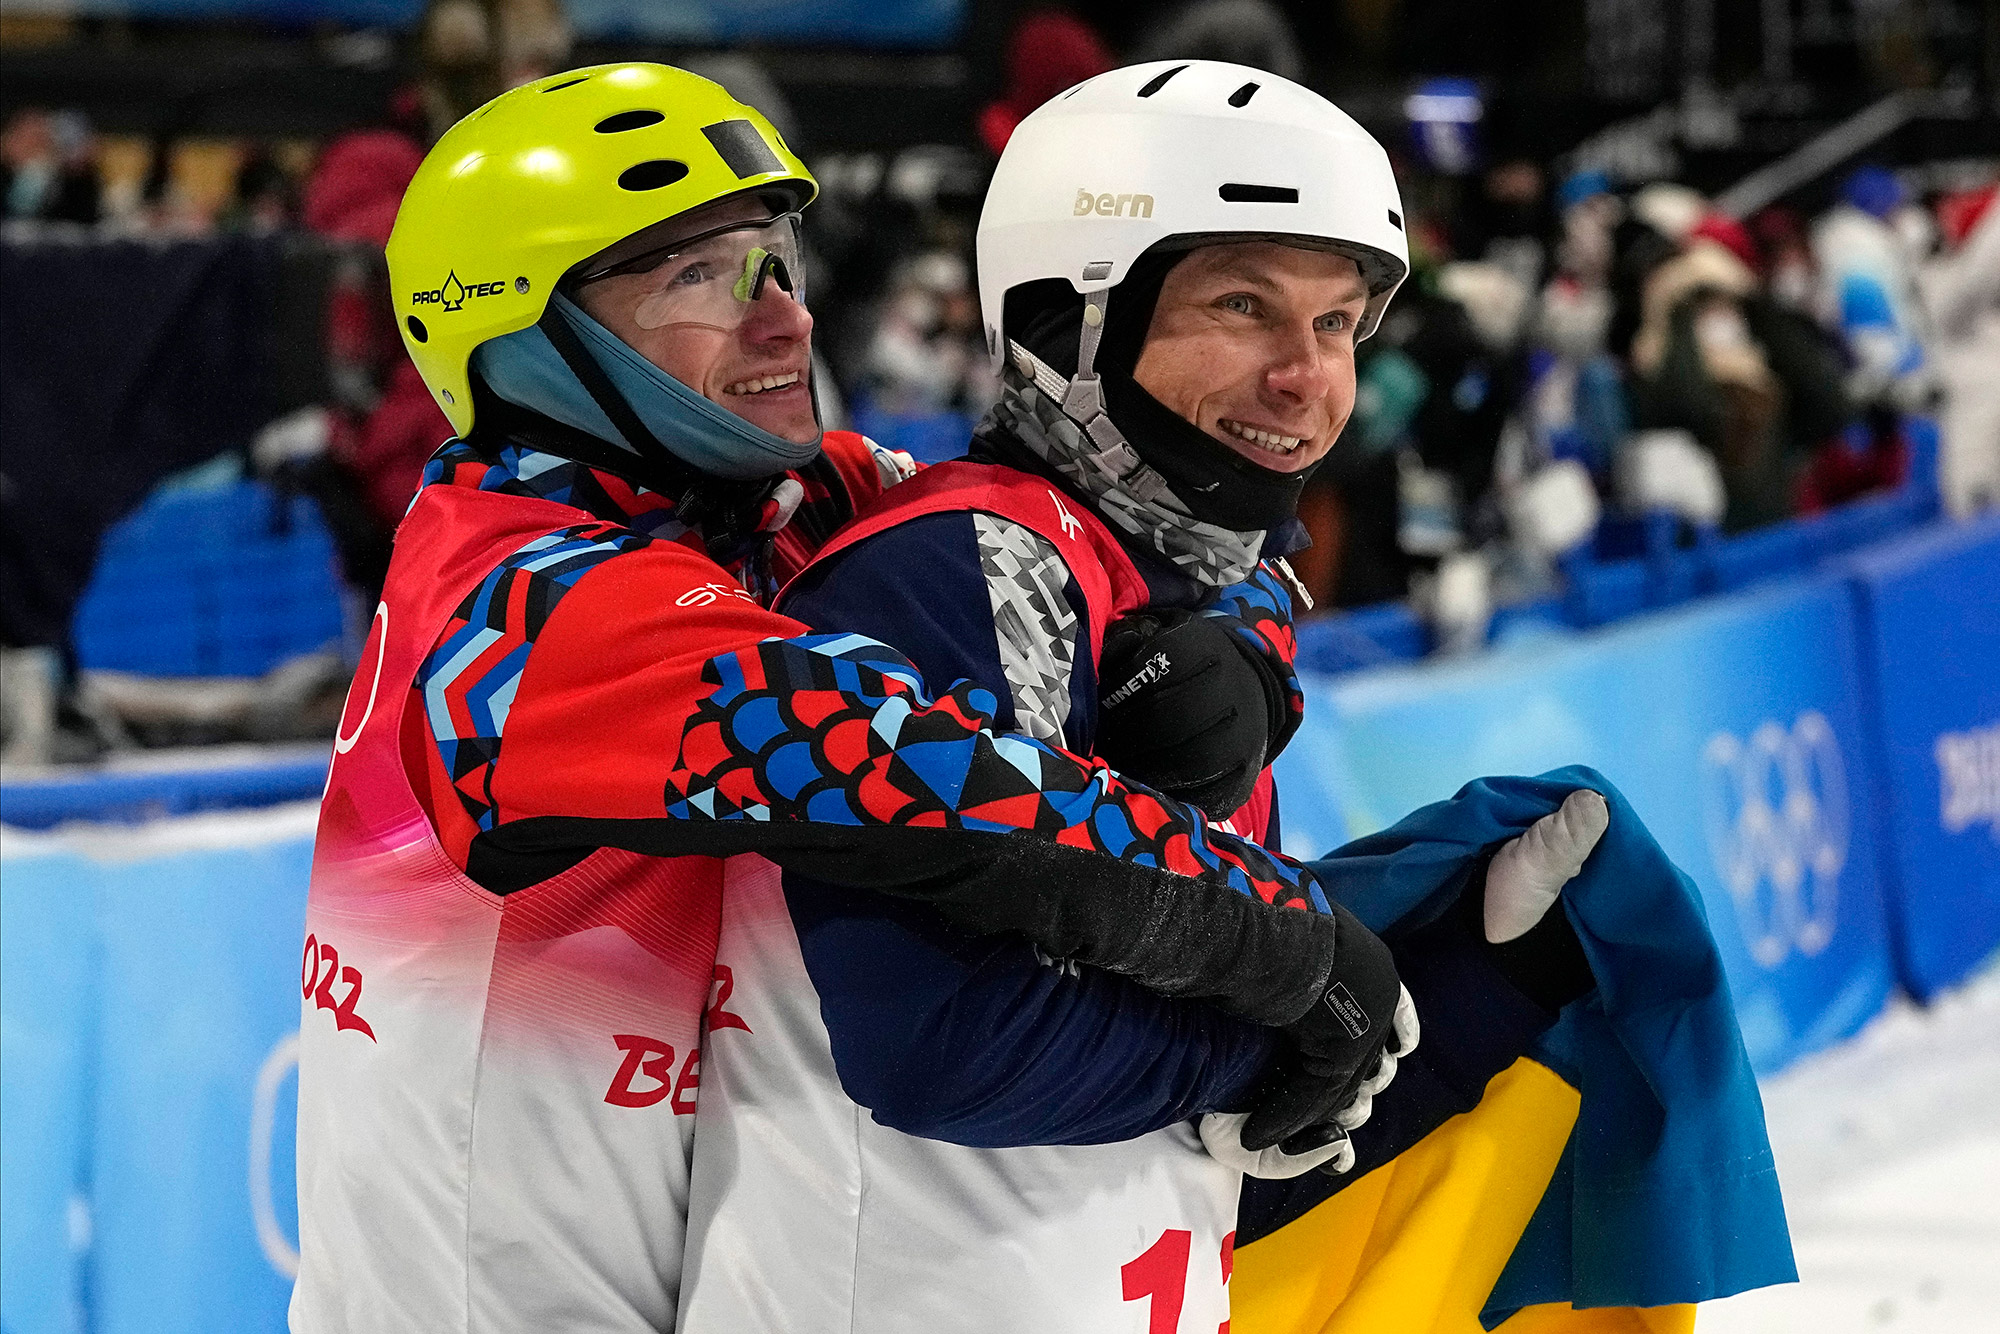 Russian freestyle skier Ilia Burov hugs Ukraine's Oleksandr Abramenko as they celebrate medaling in the aerials final on Wednesday.